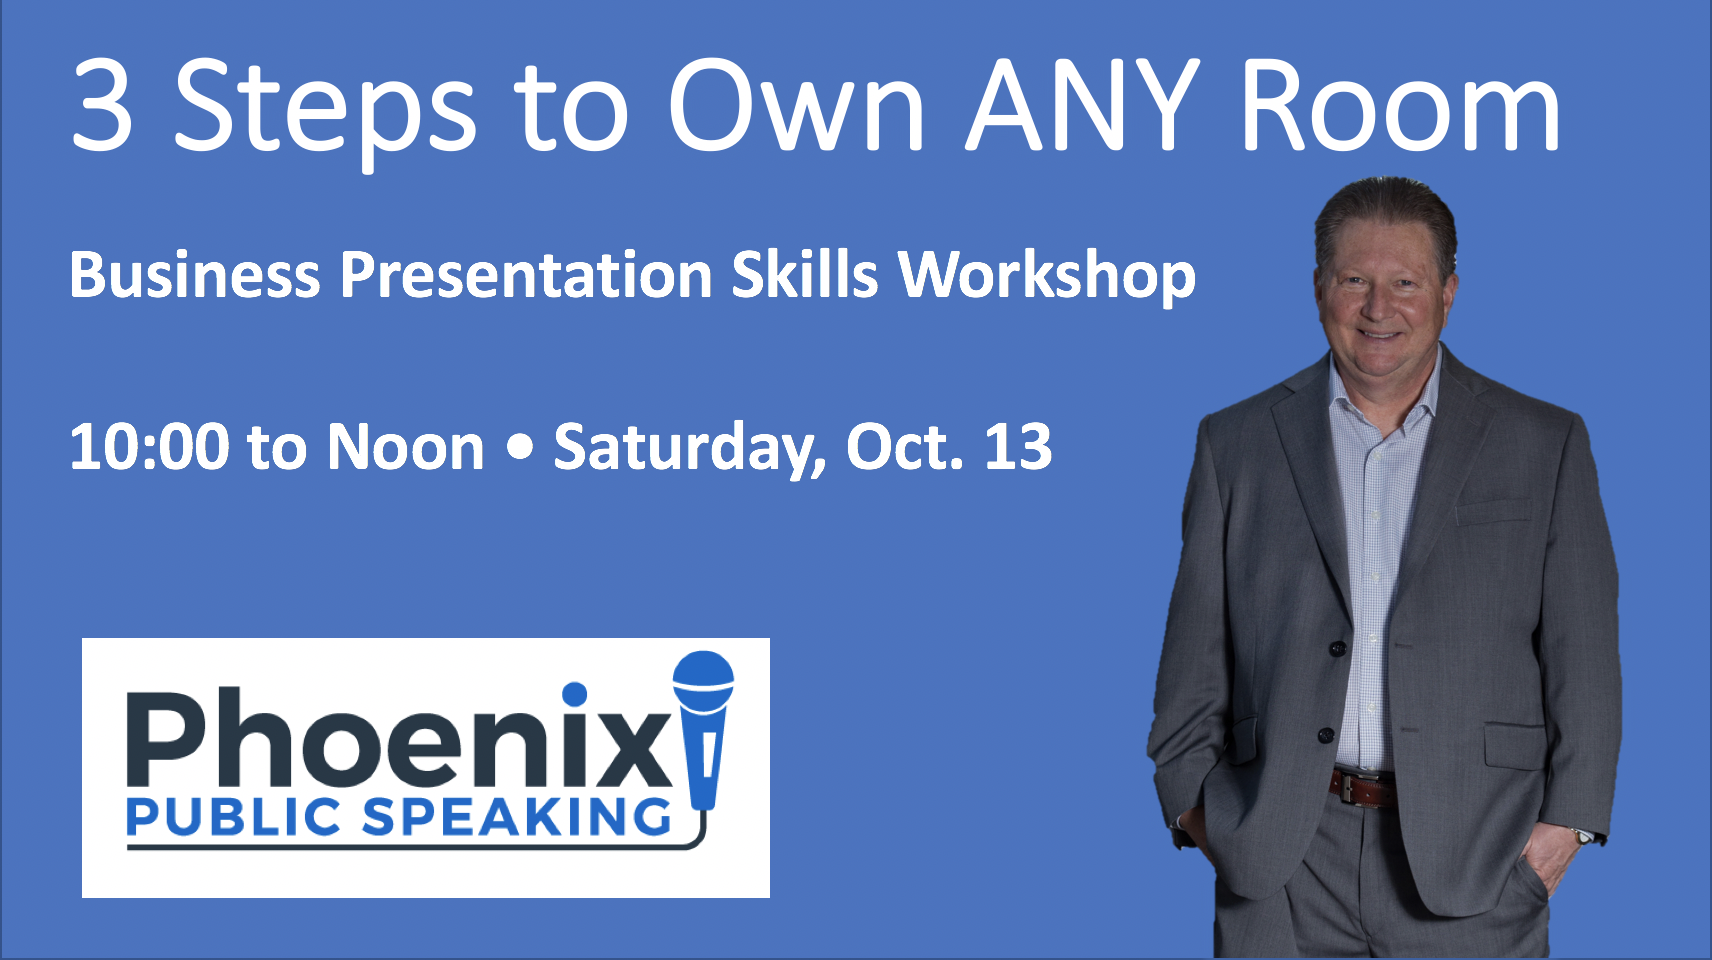 Phoenix public speaking AD for business presentation skills workshop.